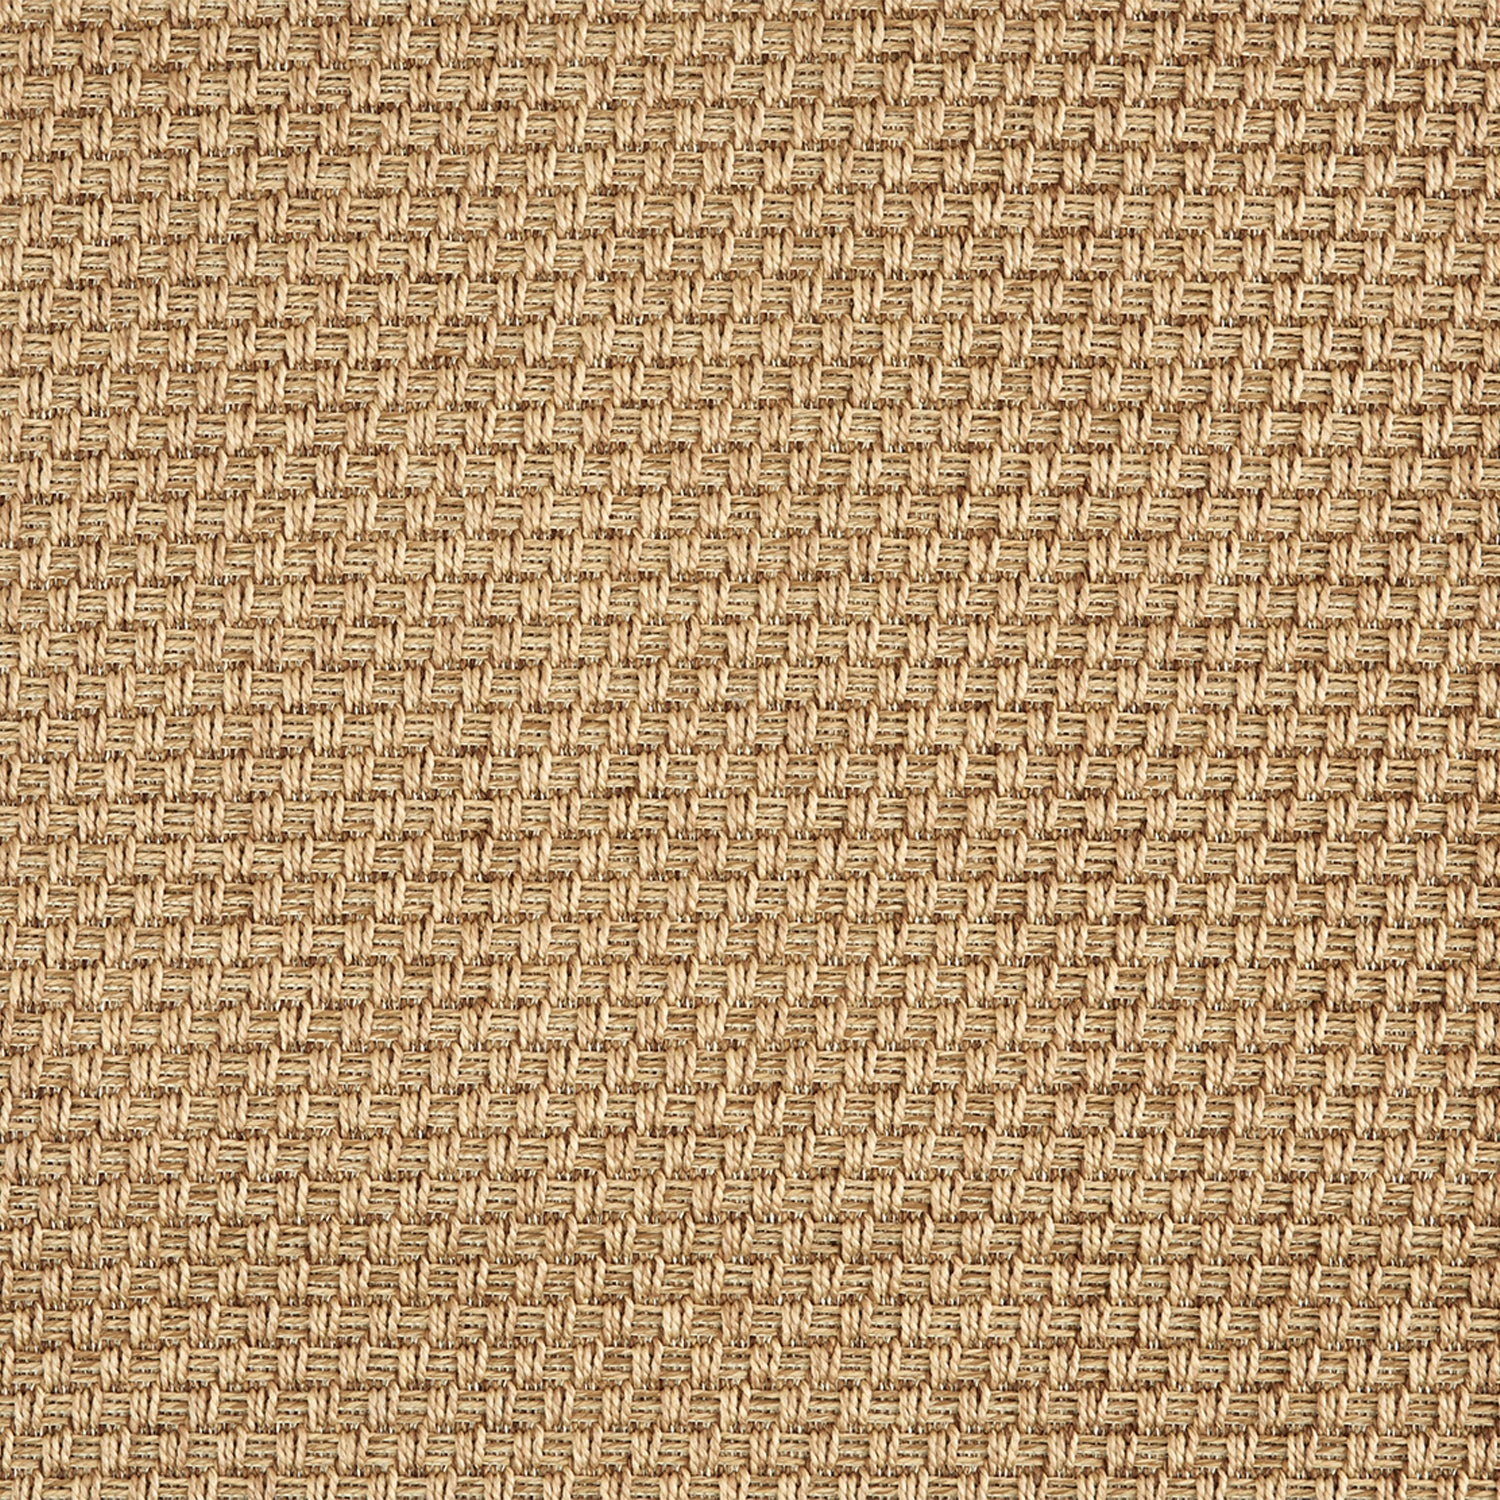 Outdoor broadloom carpet swatch in a flat grid weave in tan and brown.